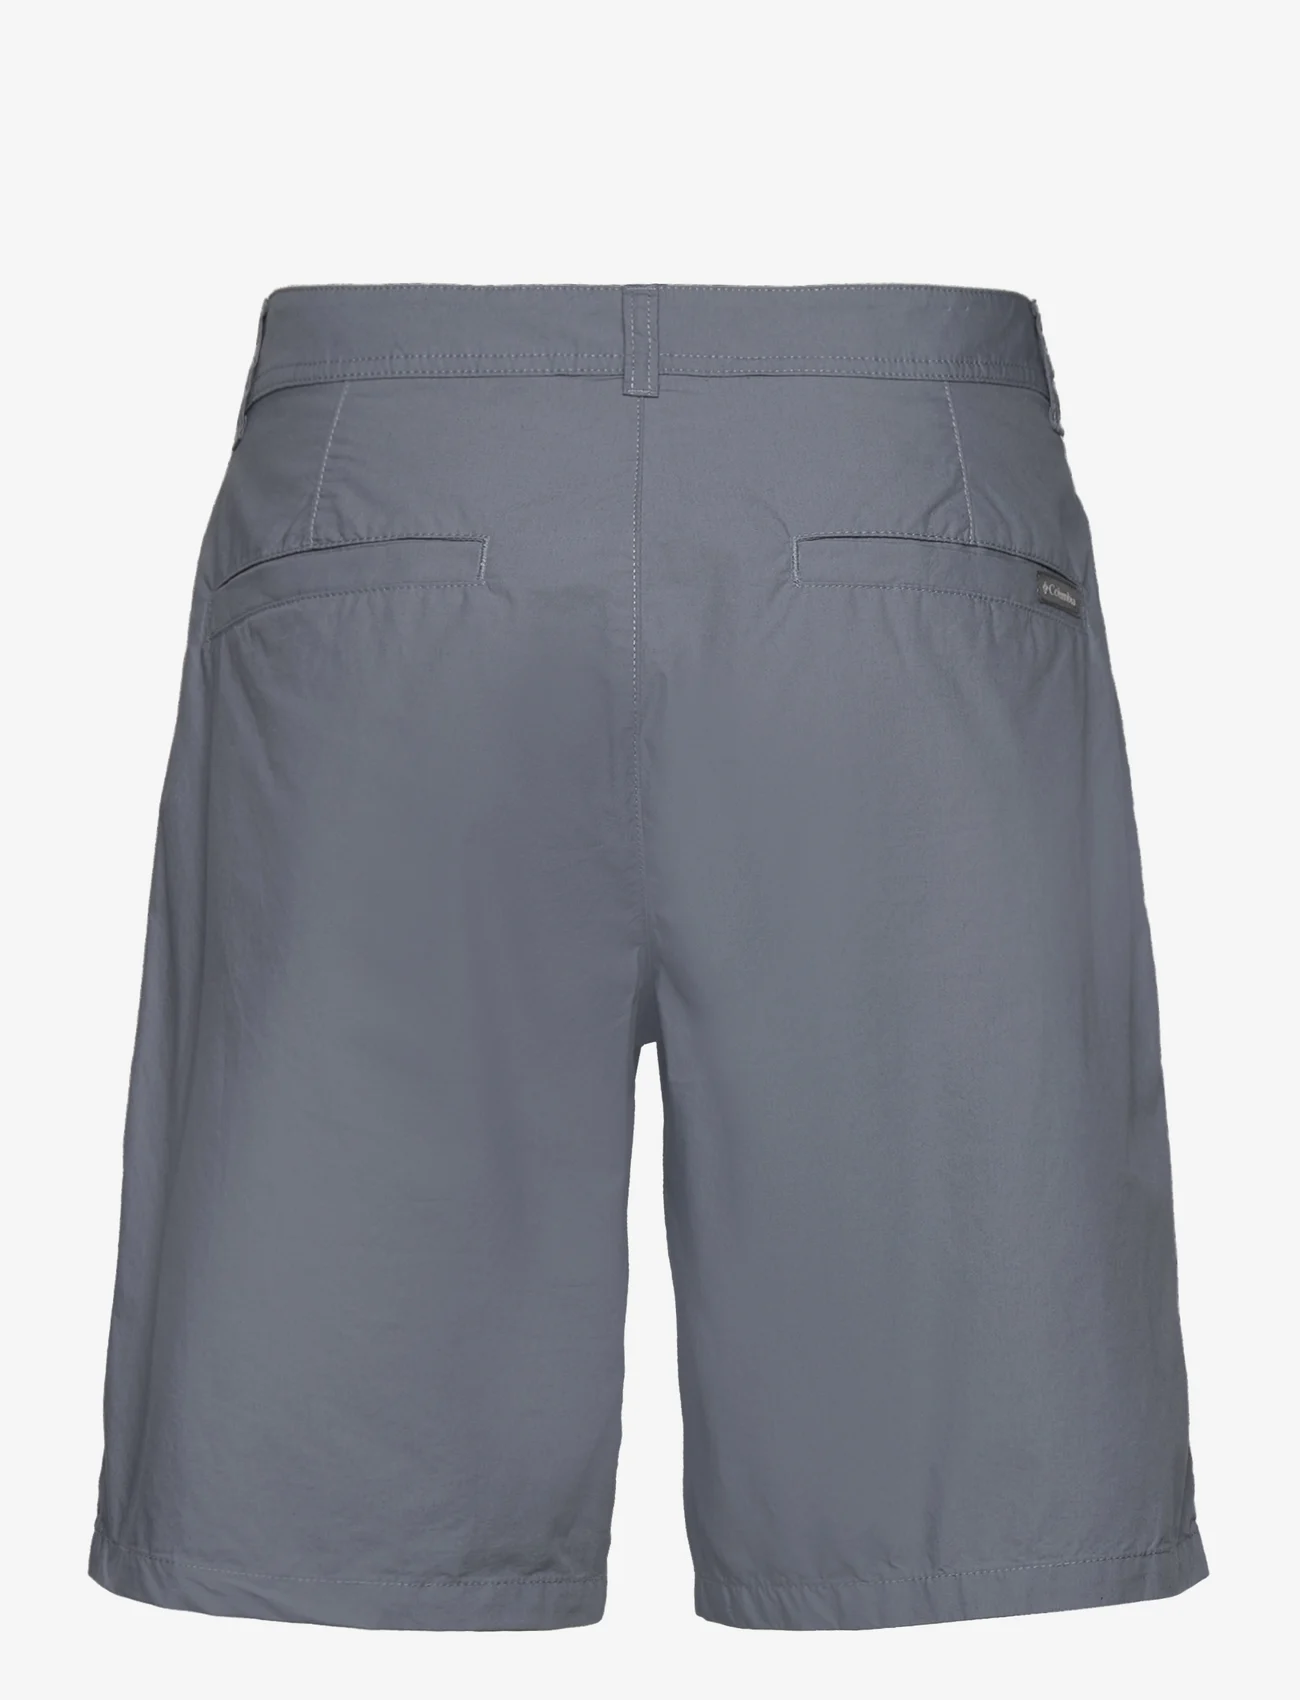 Columbia Sportswear - Washed Out Short - udendørsshorts - grey ash - 1